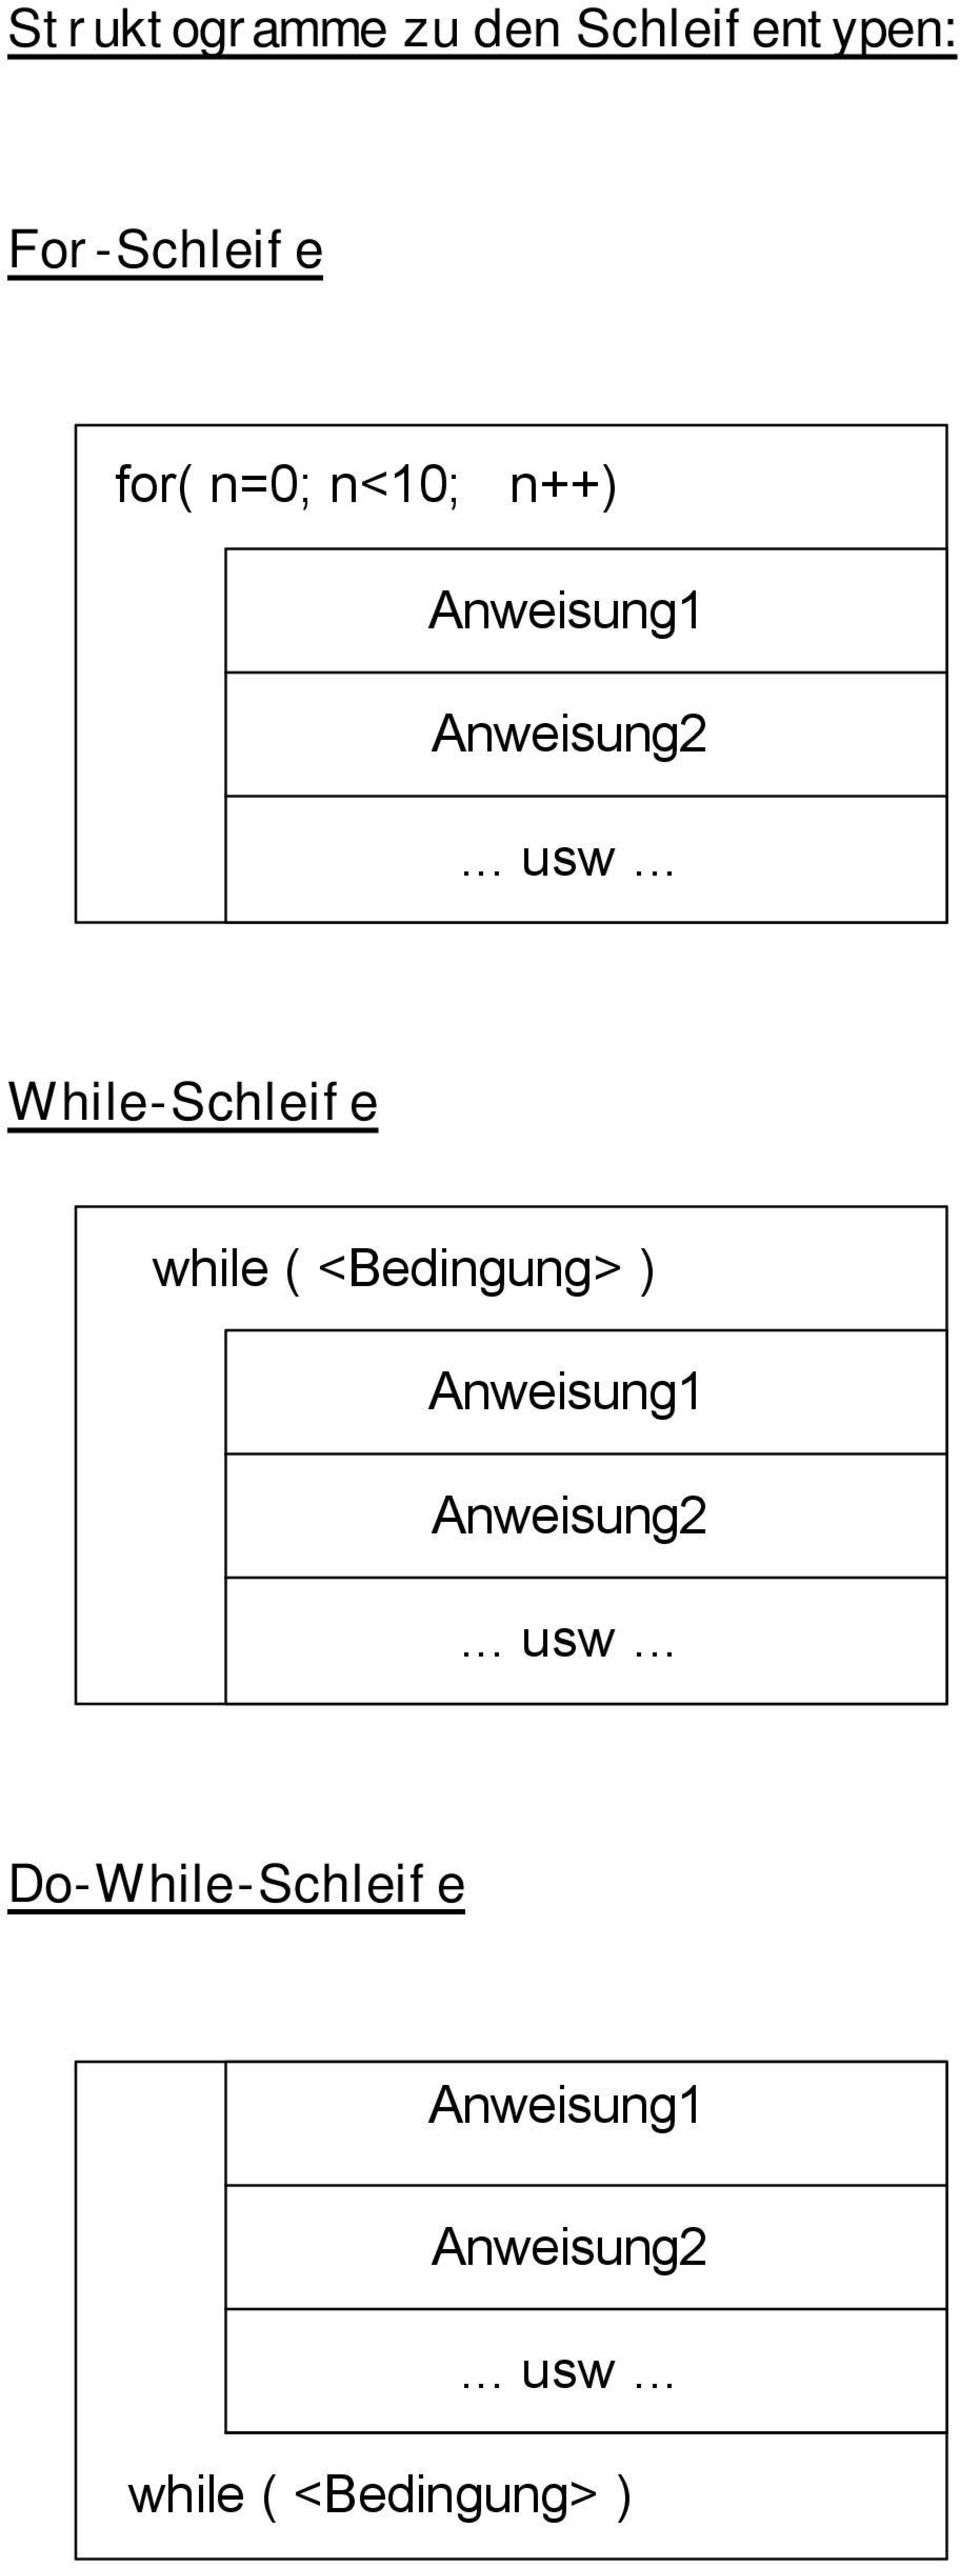 While-Schleife while ( <Bedingung> ) Anweisung1